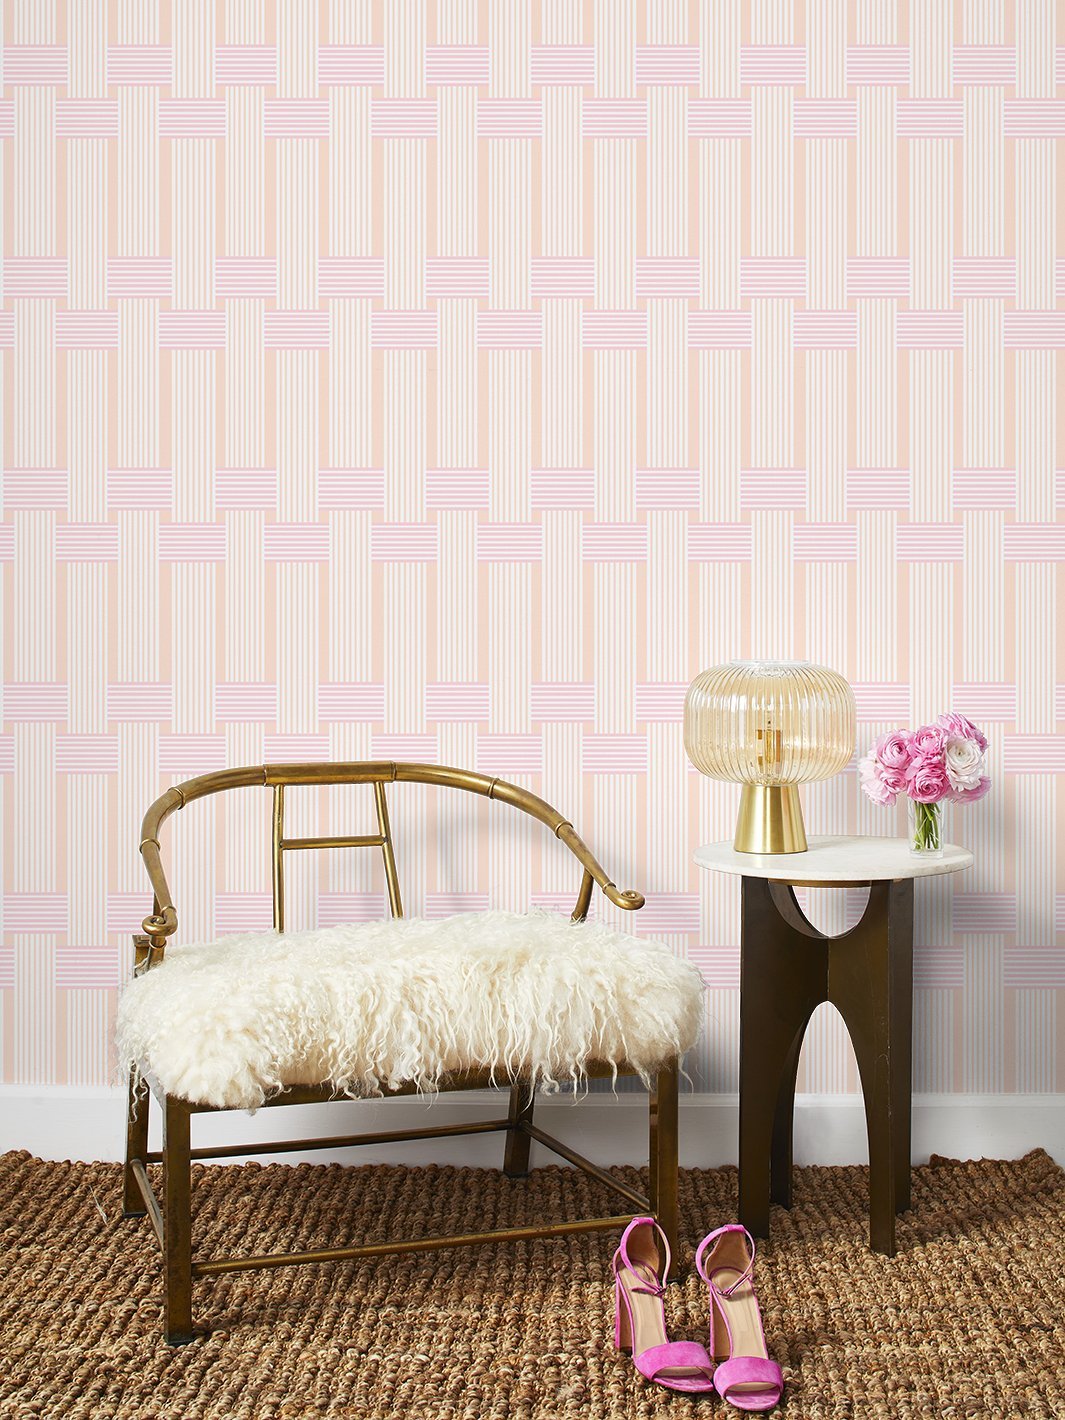 Pastel Wallpaper For Walls | Pastel Color Wallpaper Designs & Patterns |  Wallshoppe